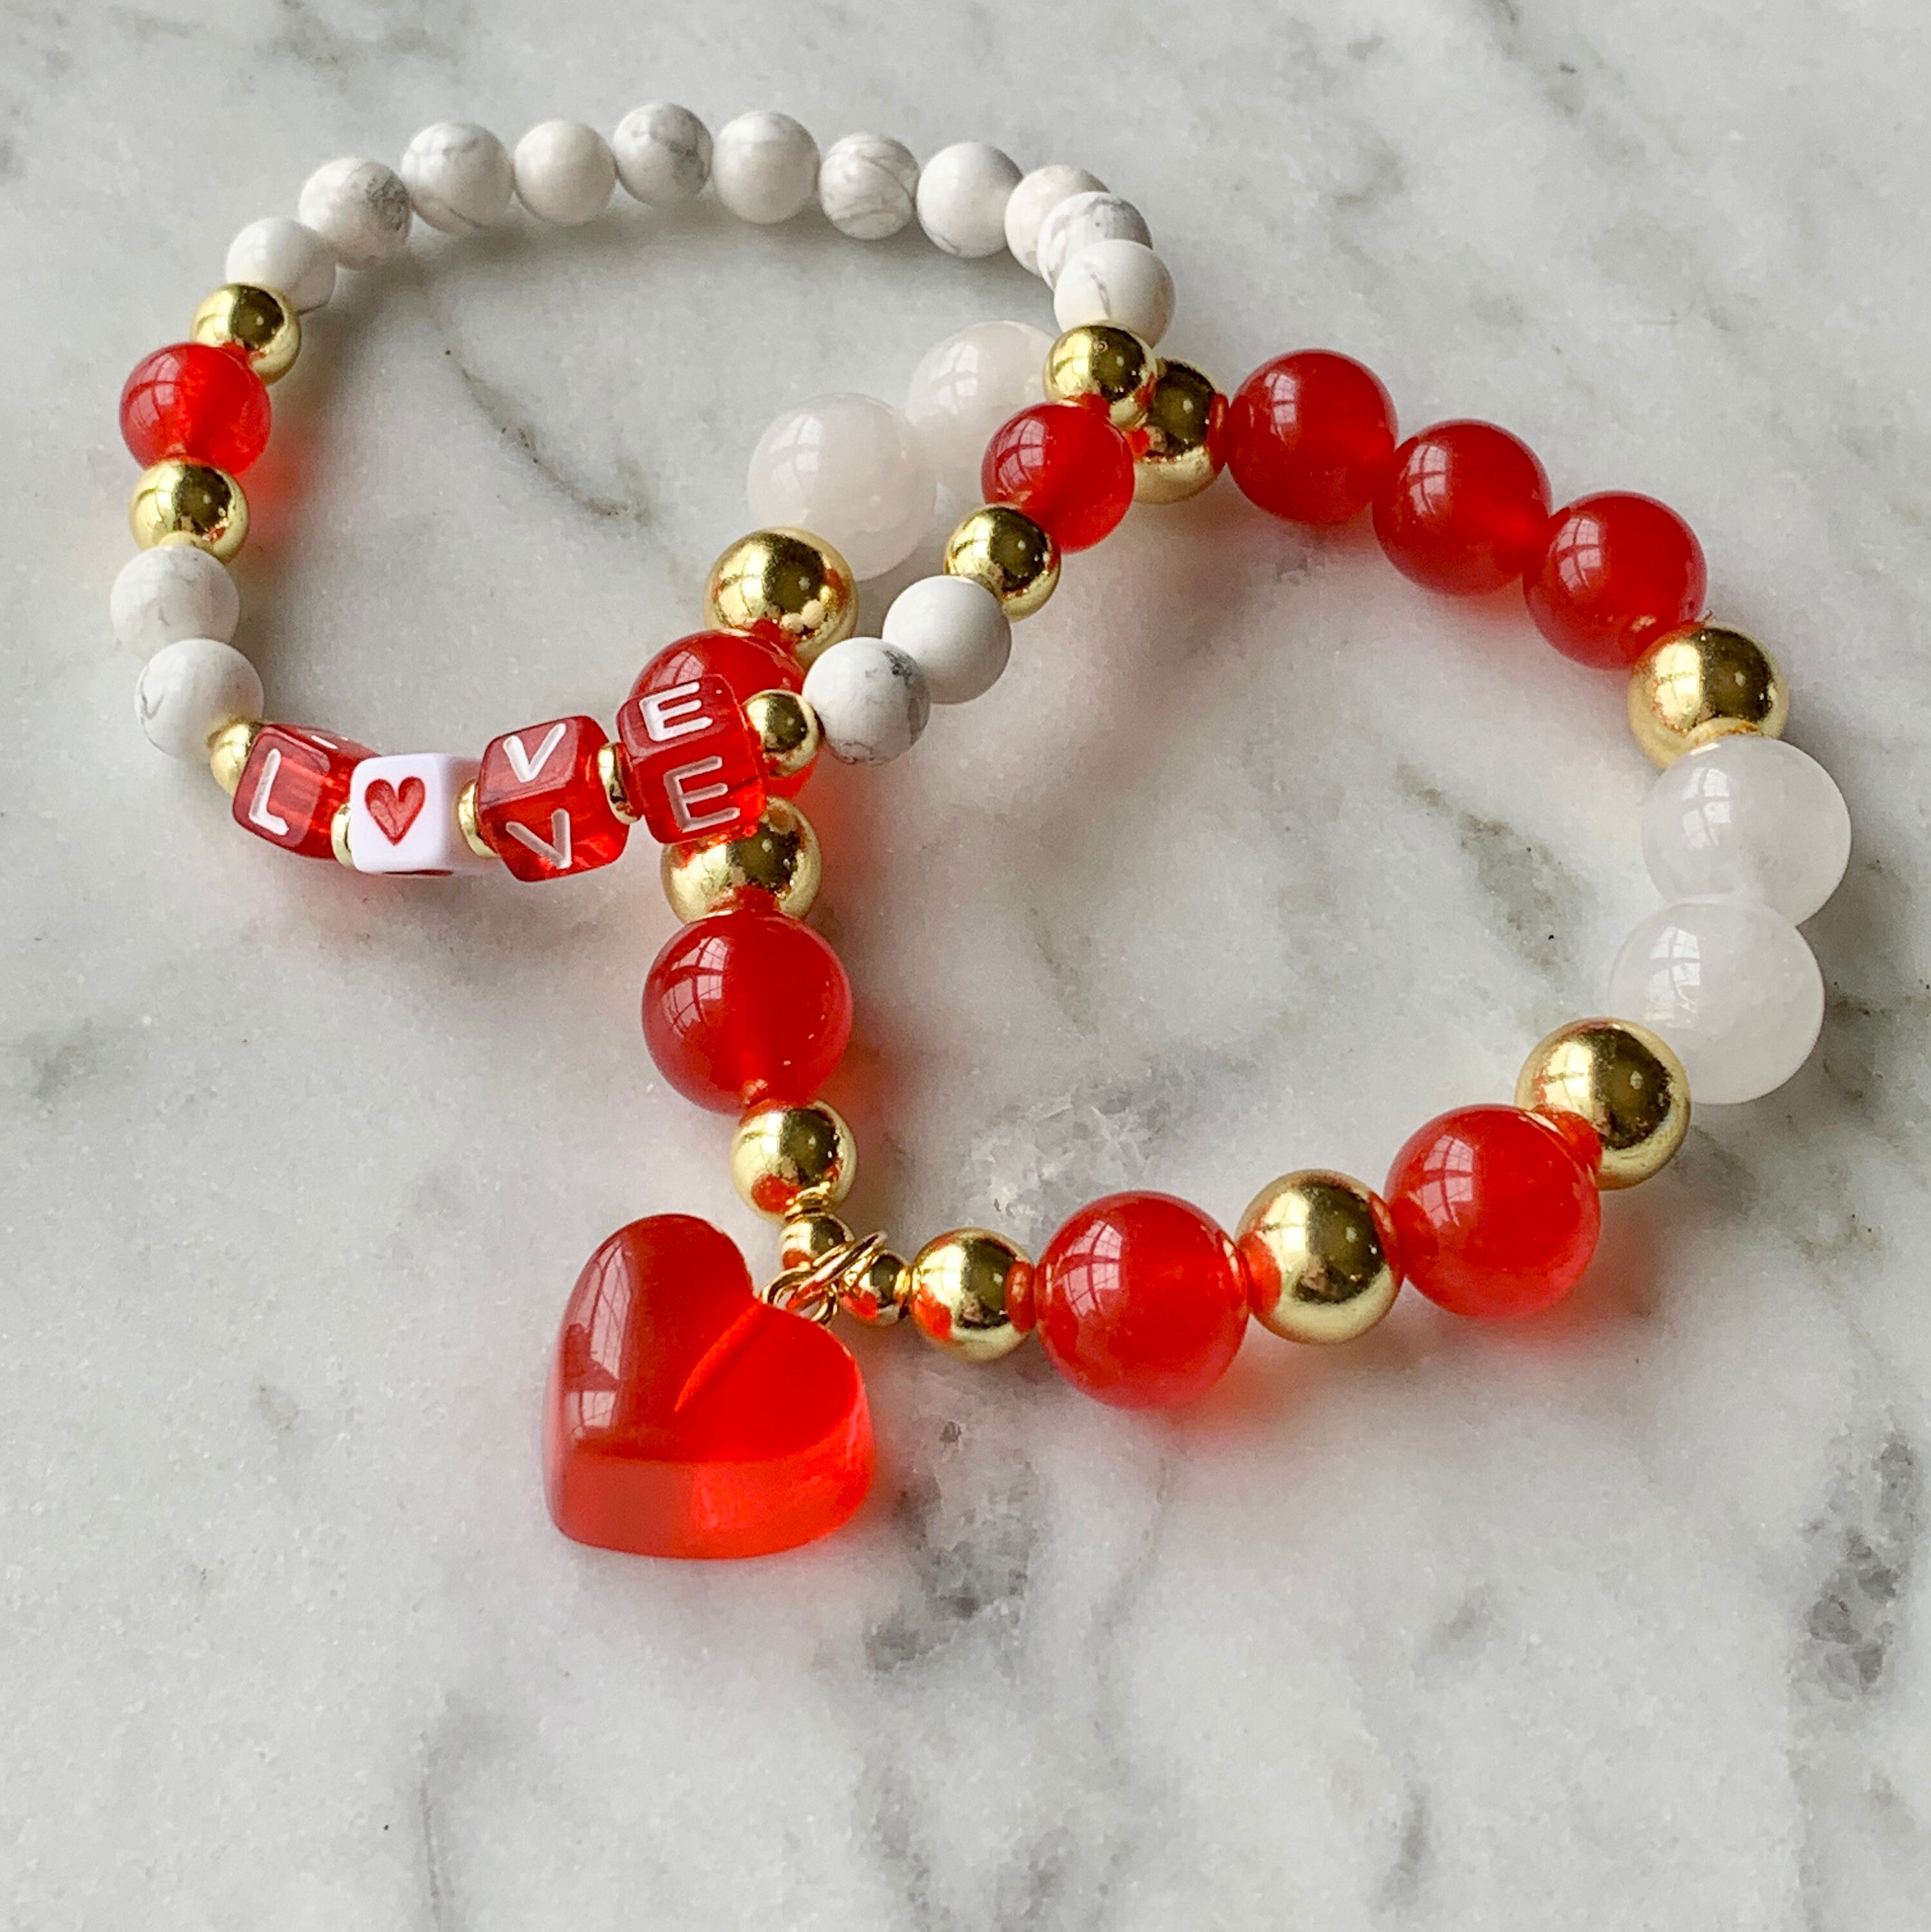 Heiheiup Bracelet 20 Charms Earring Bling PC Valentine's Heart